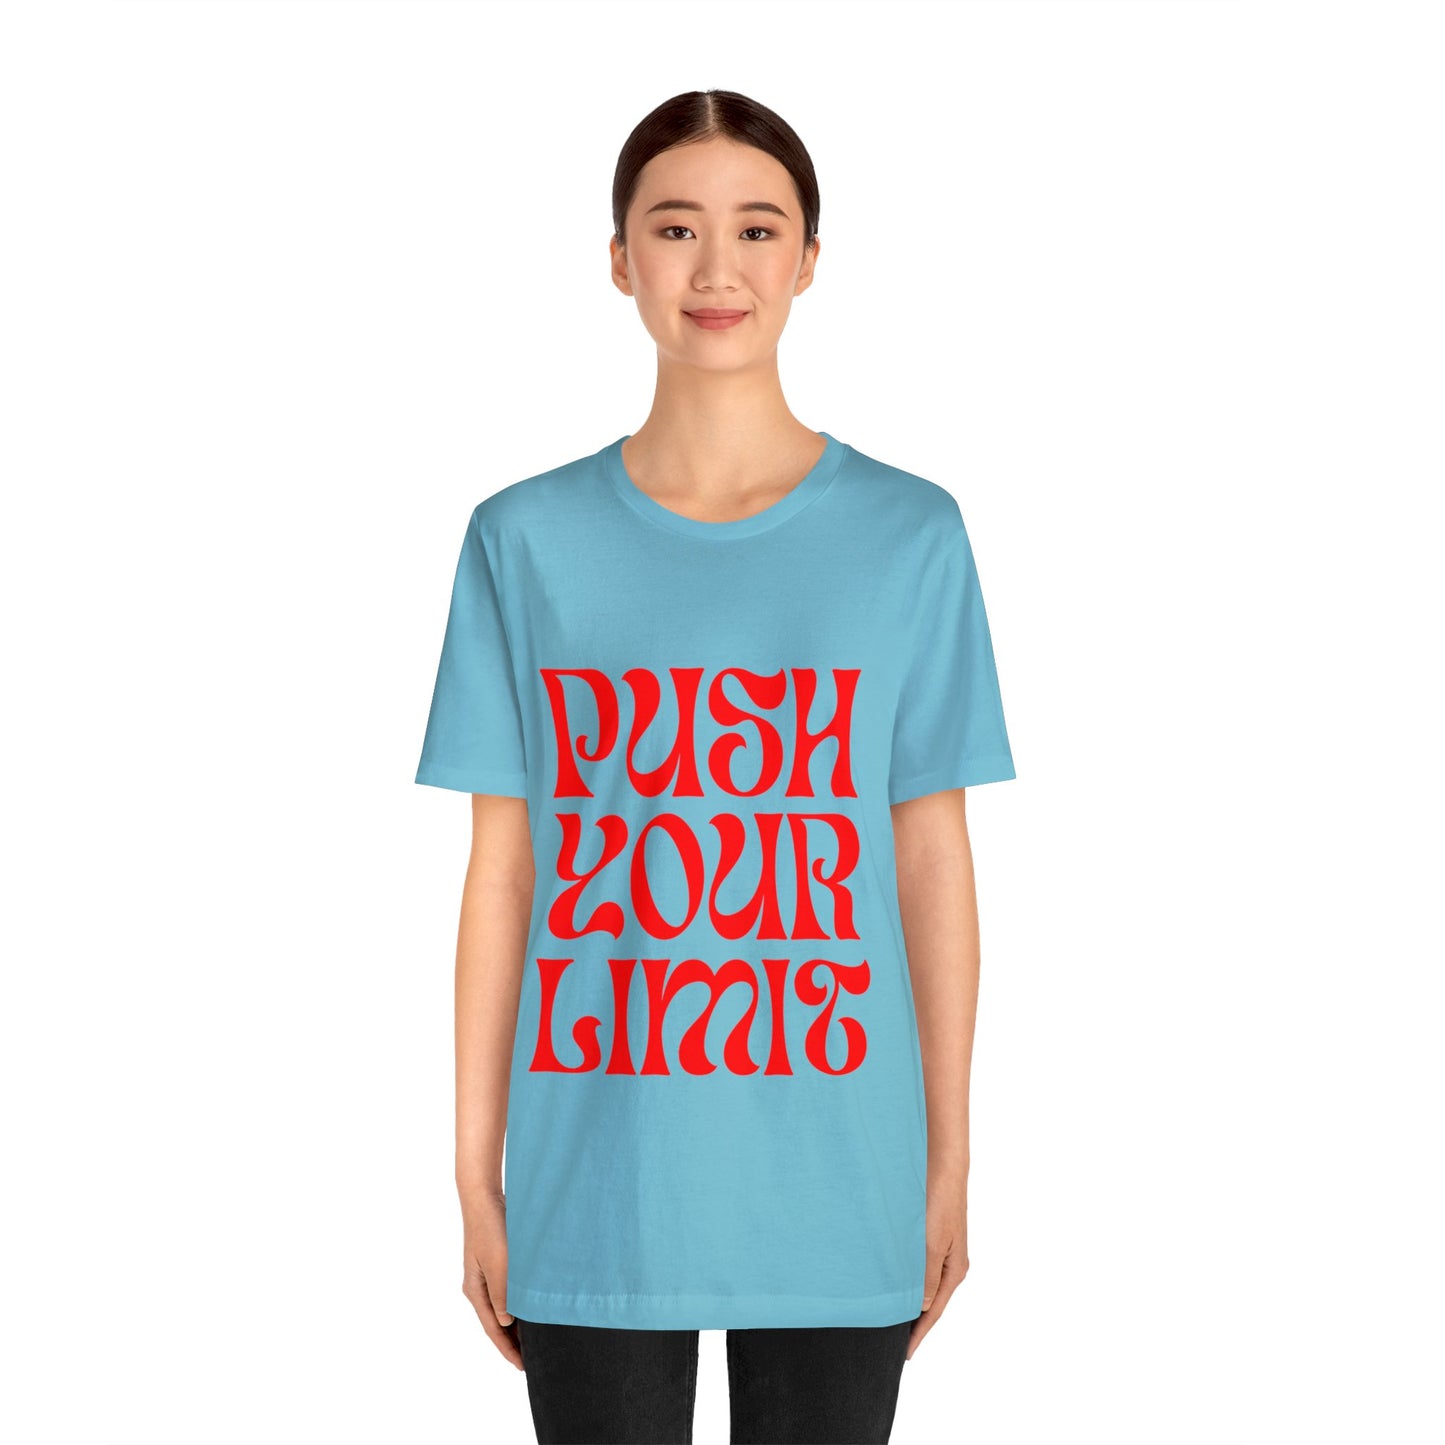 Push Your Limit - Inspirational, Motivational T Shirt for Men and Women